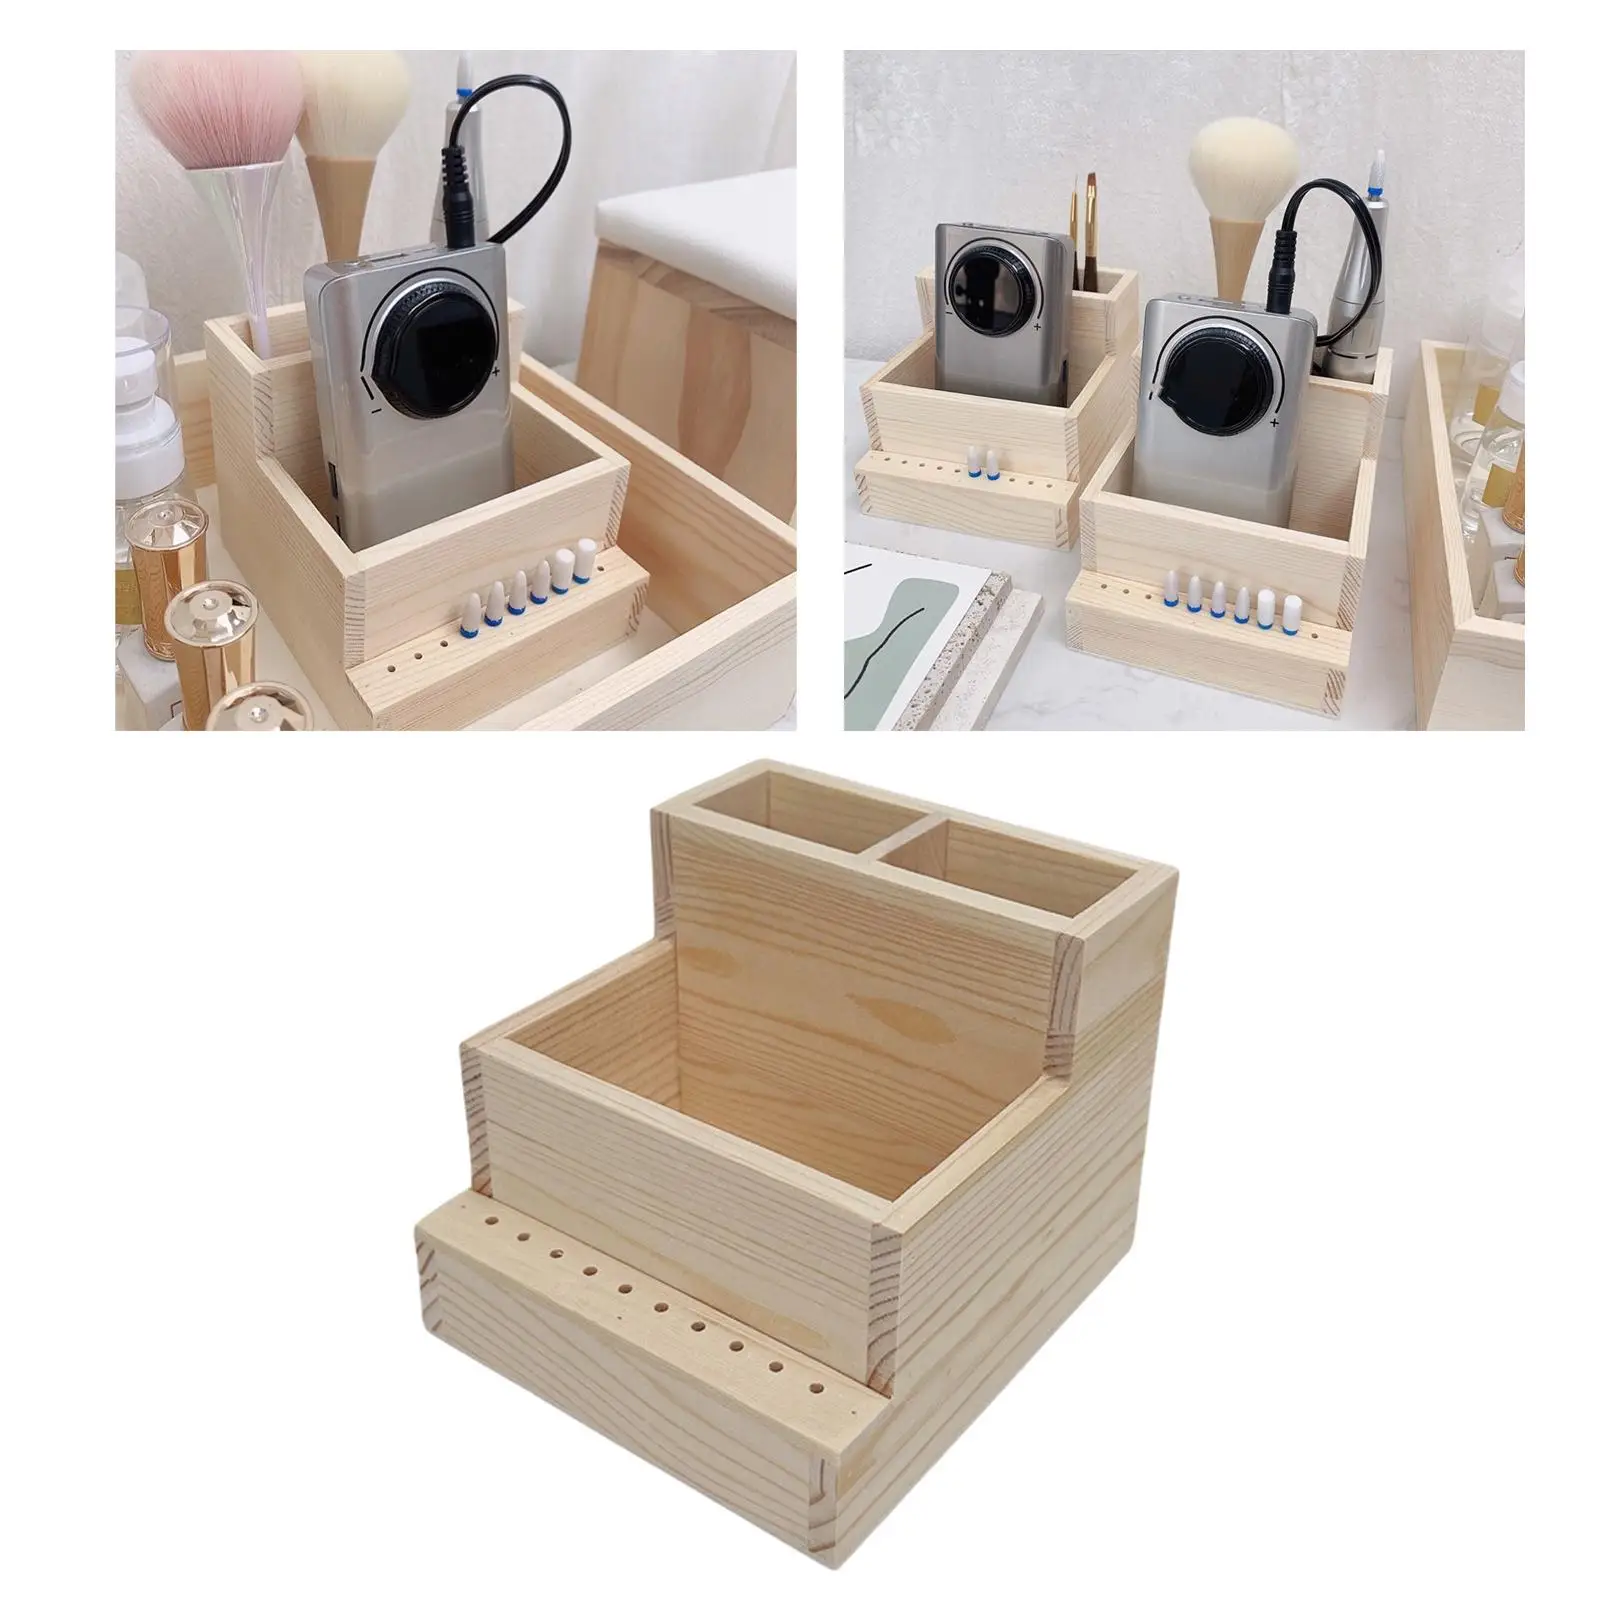 Nail Drill Machine Bits Wooden Holder, Displaying Makeup Brushes,Eyebrow Manicure Tools Box for Nail Salon Premium Display Box